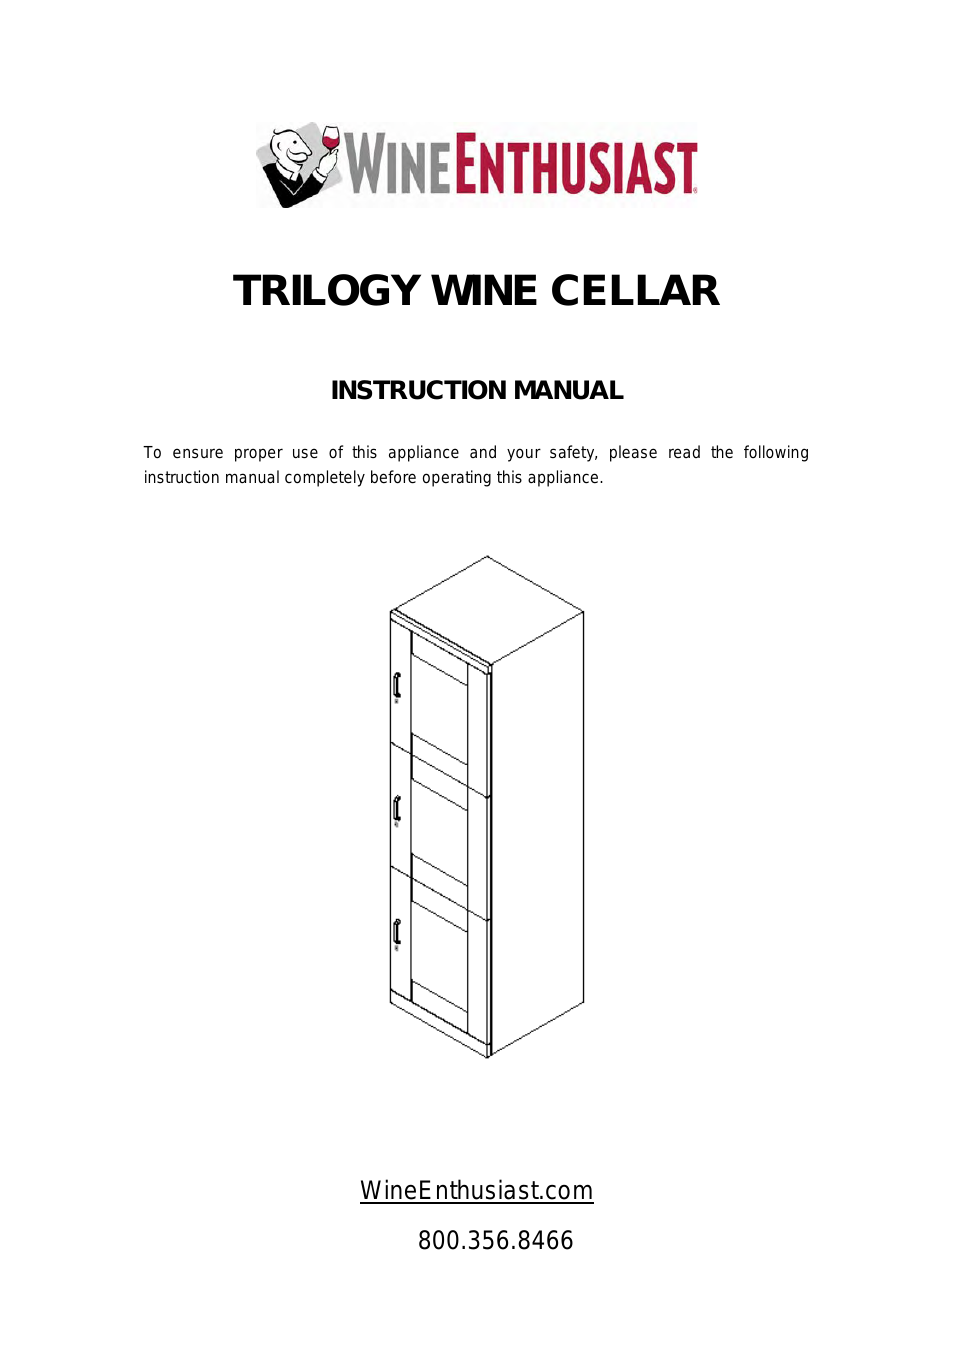 Trilogy Dual Wine Cellar